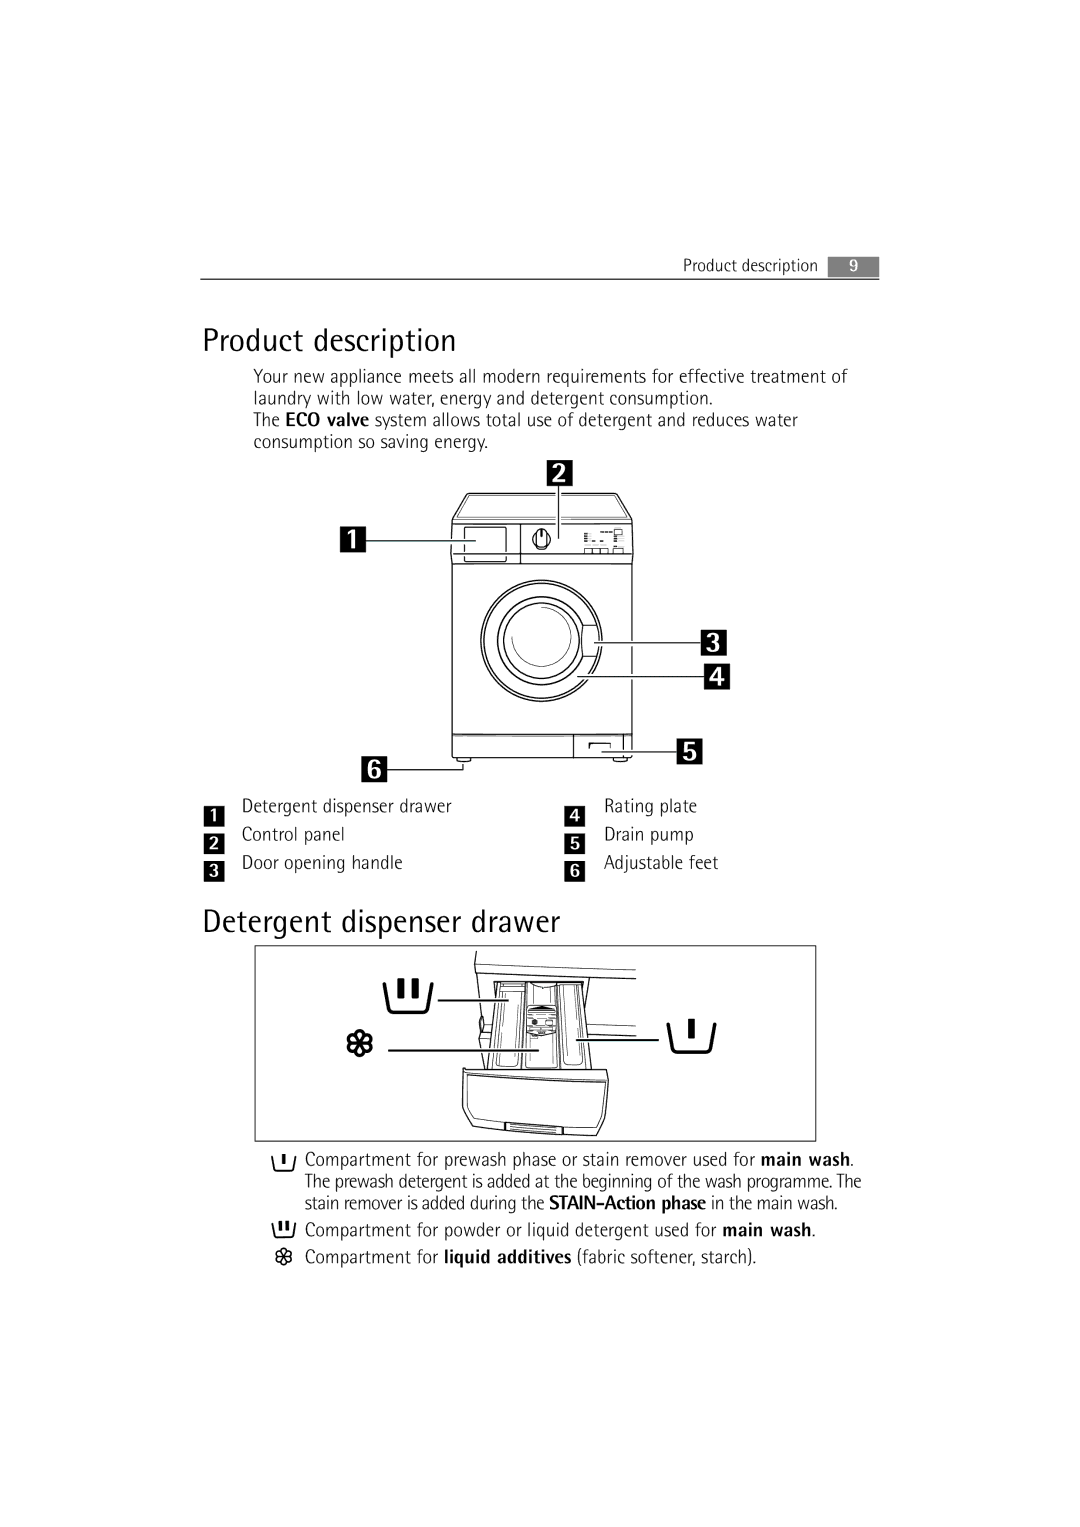 AEG 54840 manual Product description, Detergent dispenser drawer 